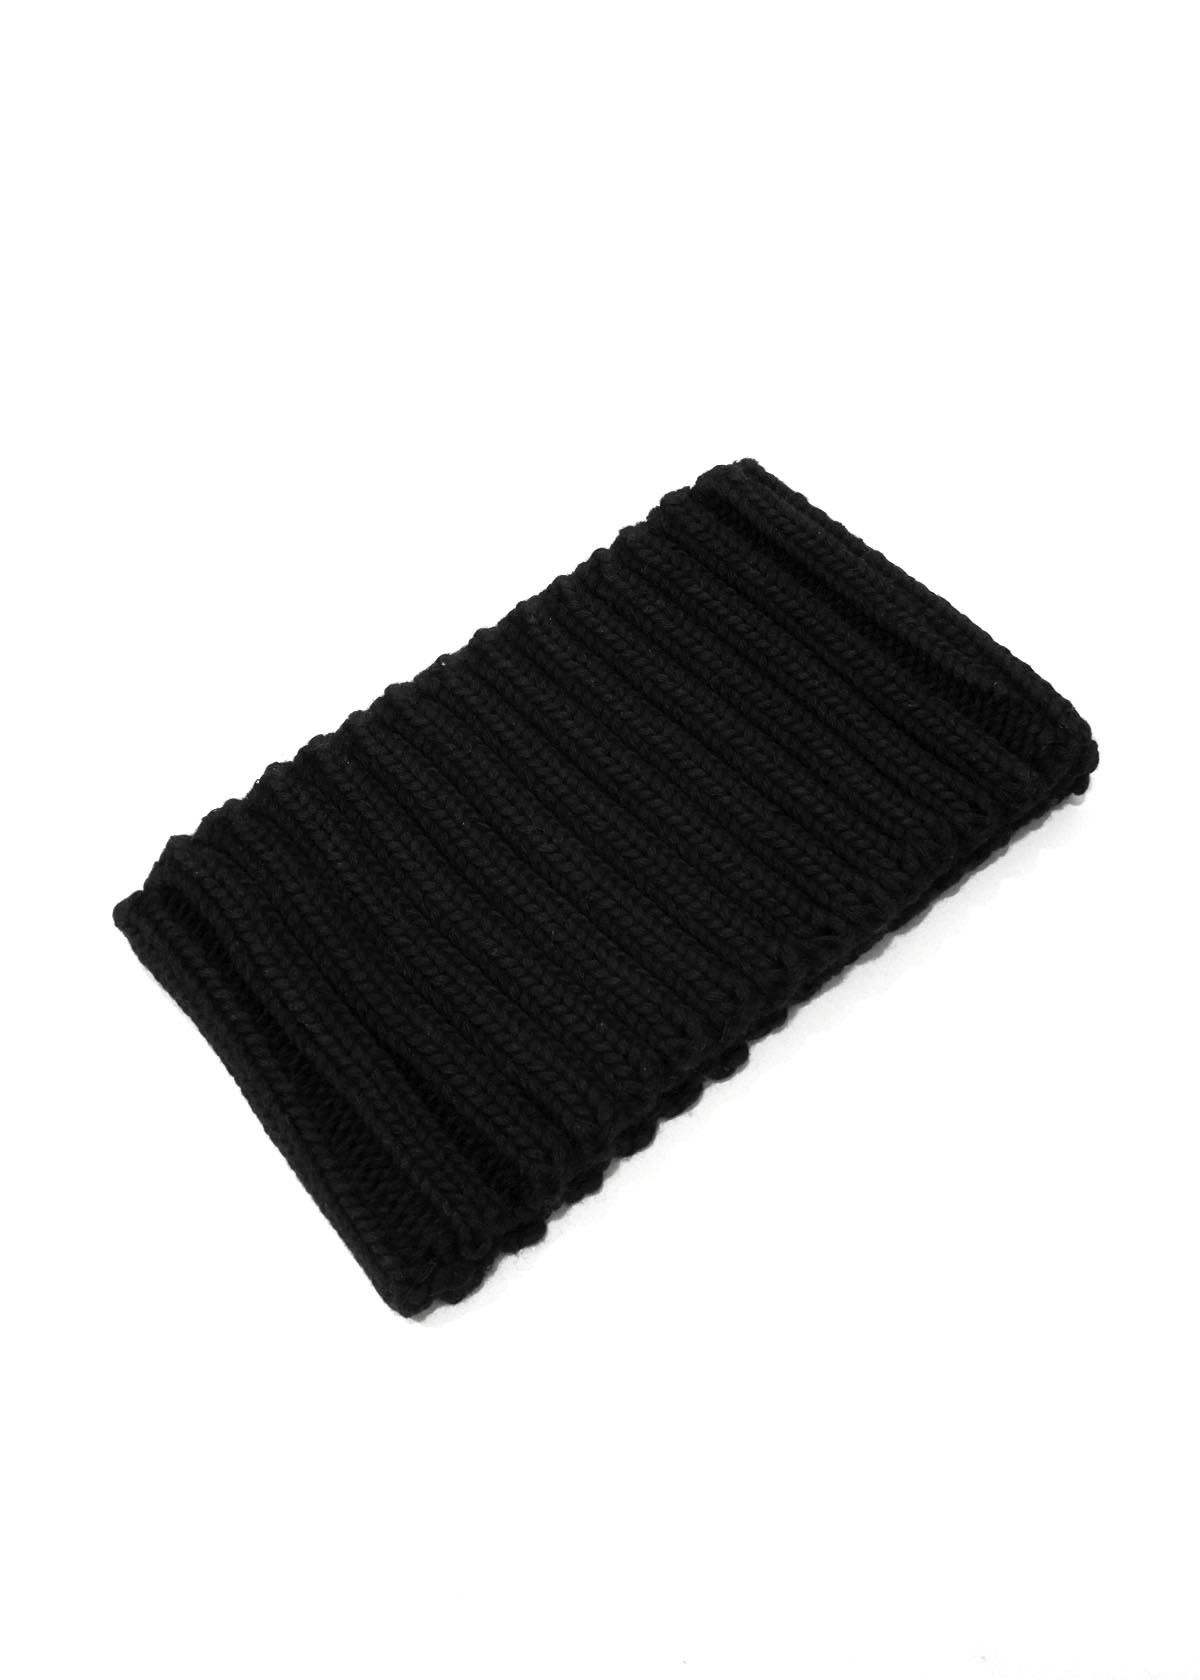 Black Knit Headband